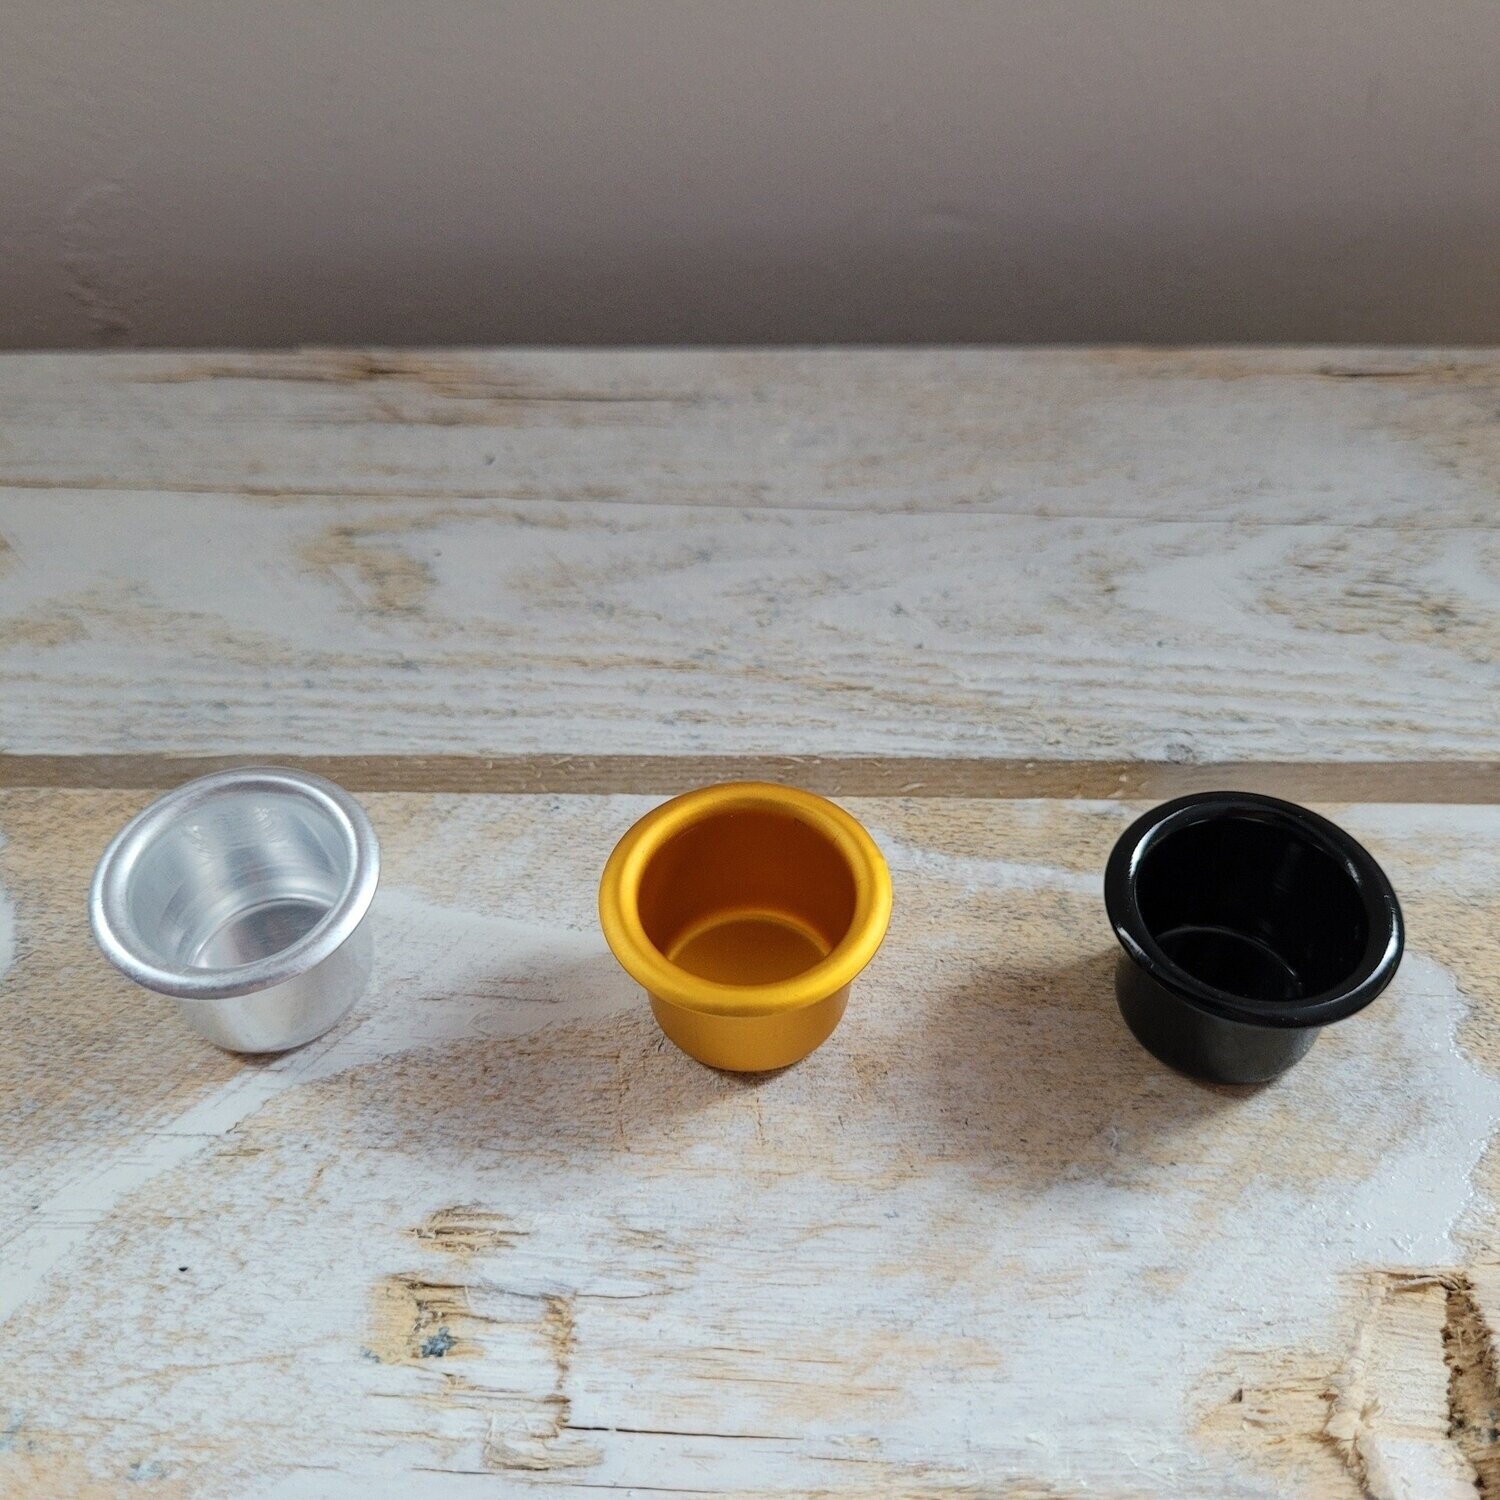 Kerzentüllen/Teelichthalter verschiedene Modelle, Kerzentüllen/Teelichthalter: K30012 Kerzentülle silber